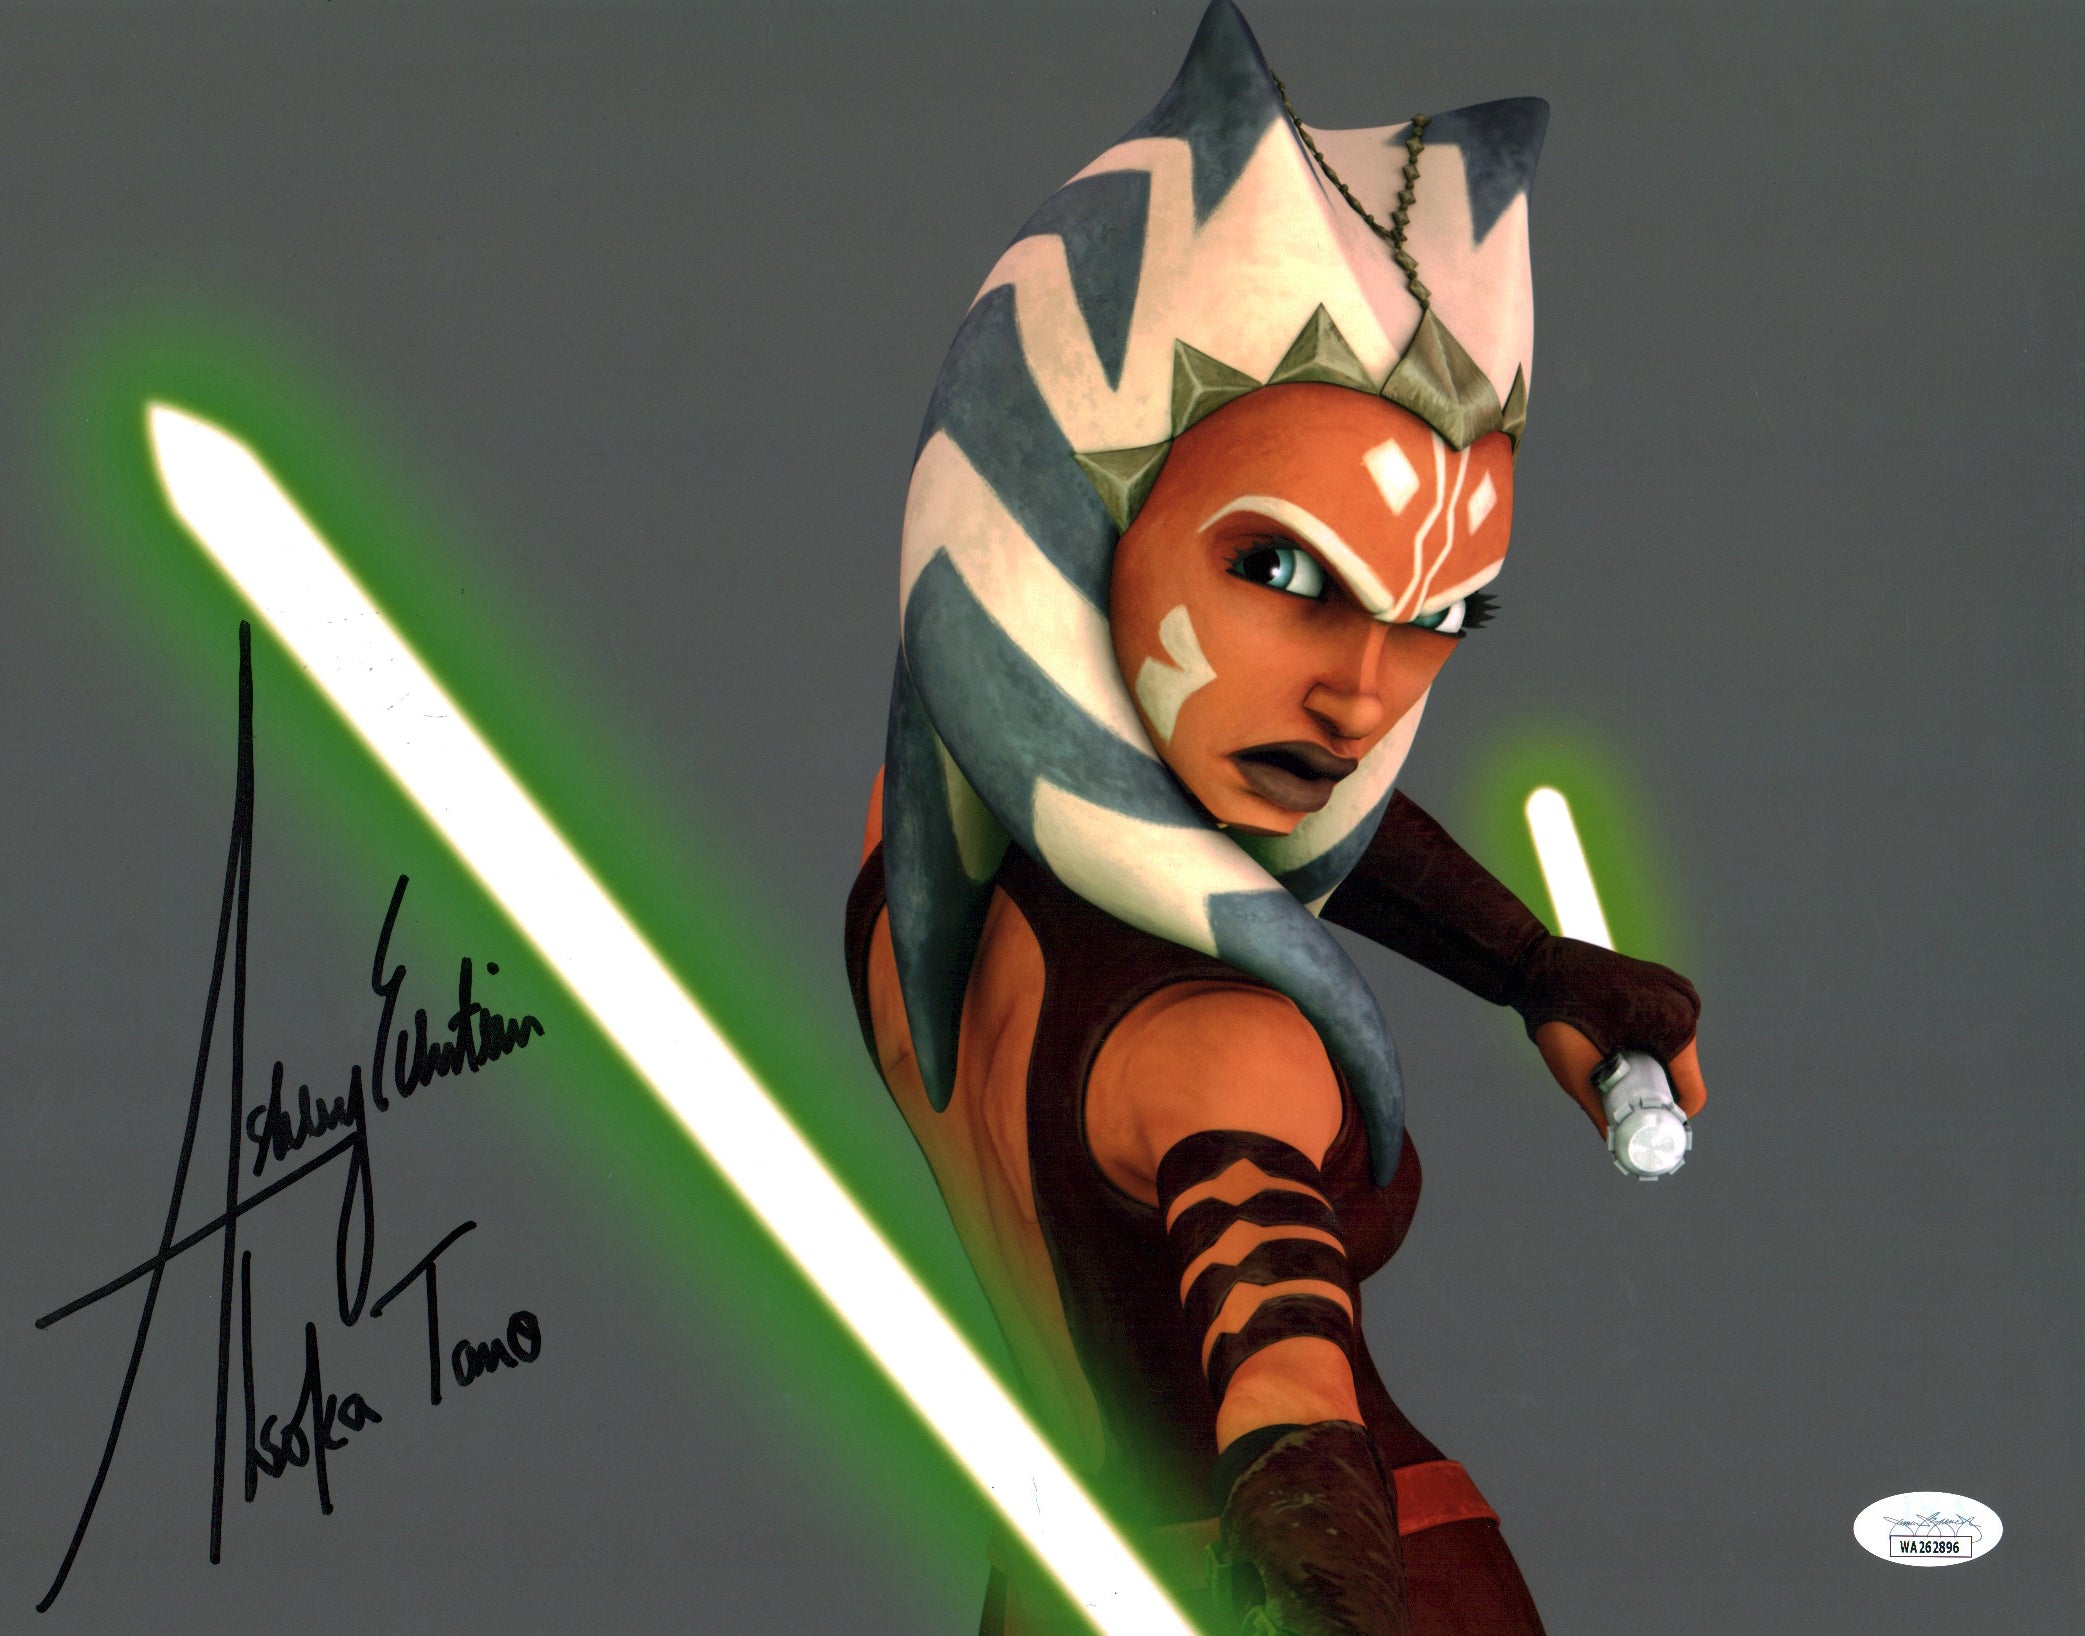 Ashley Eckstein Star Wars 11x14 Signed Photo Poster JSA Certified Autograph